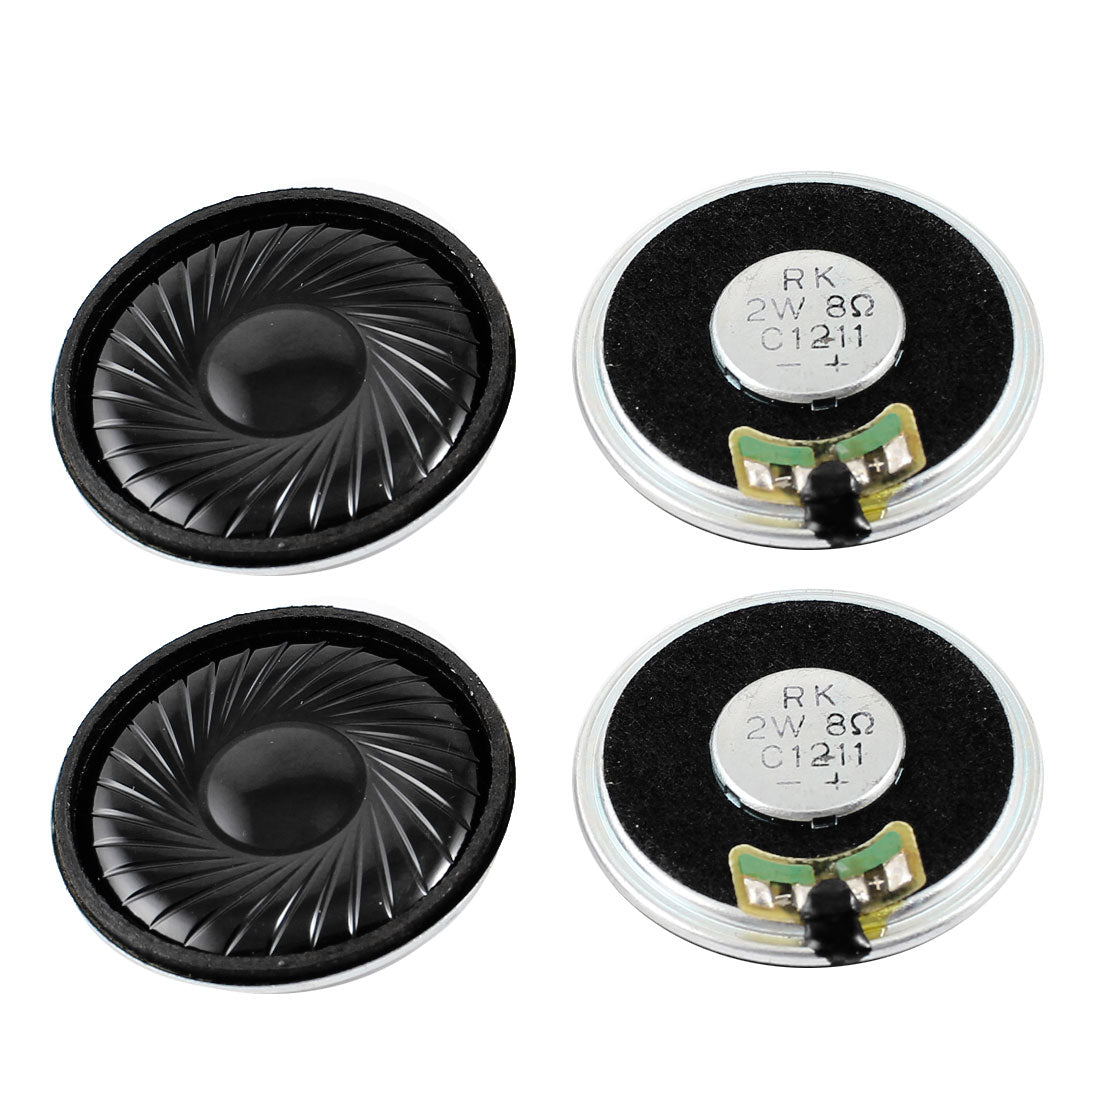 uxcell Uxcell 2W 8R 40mm Dia Metal Housing Round Internal Magnet Speaker Loudspeaker 4Pcs